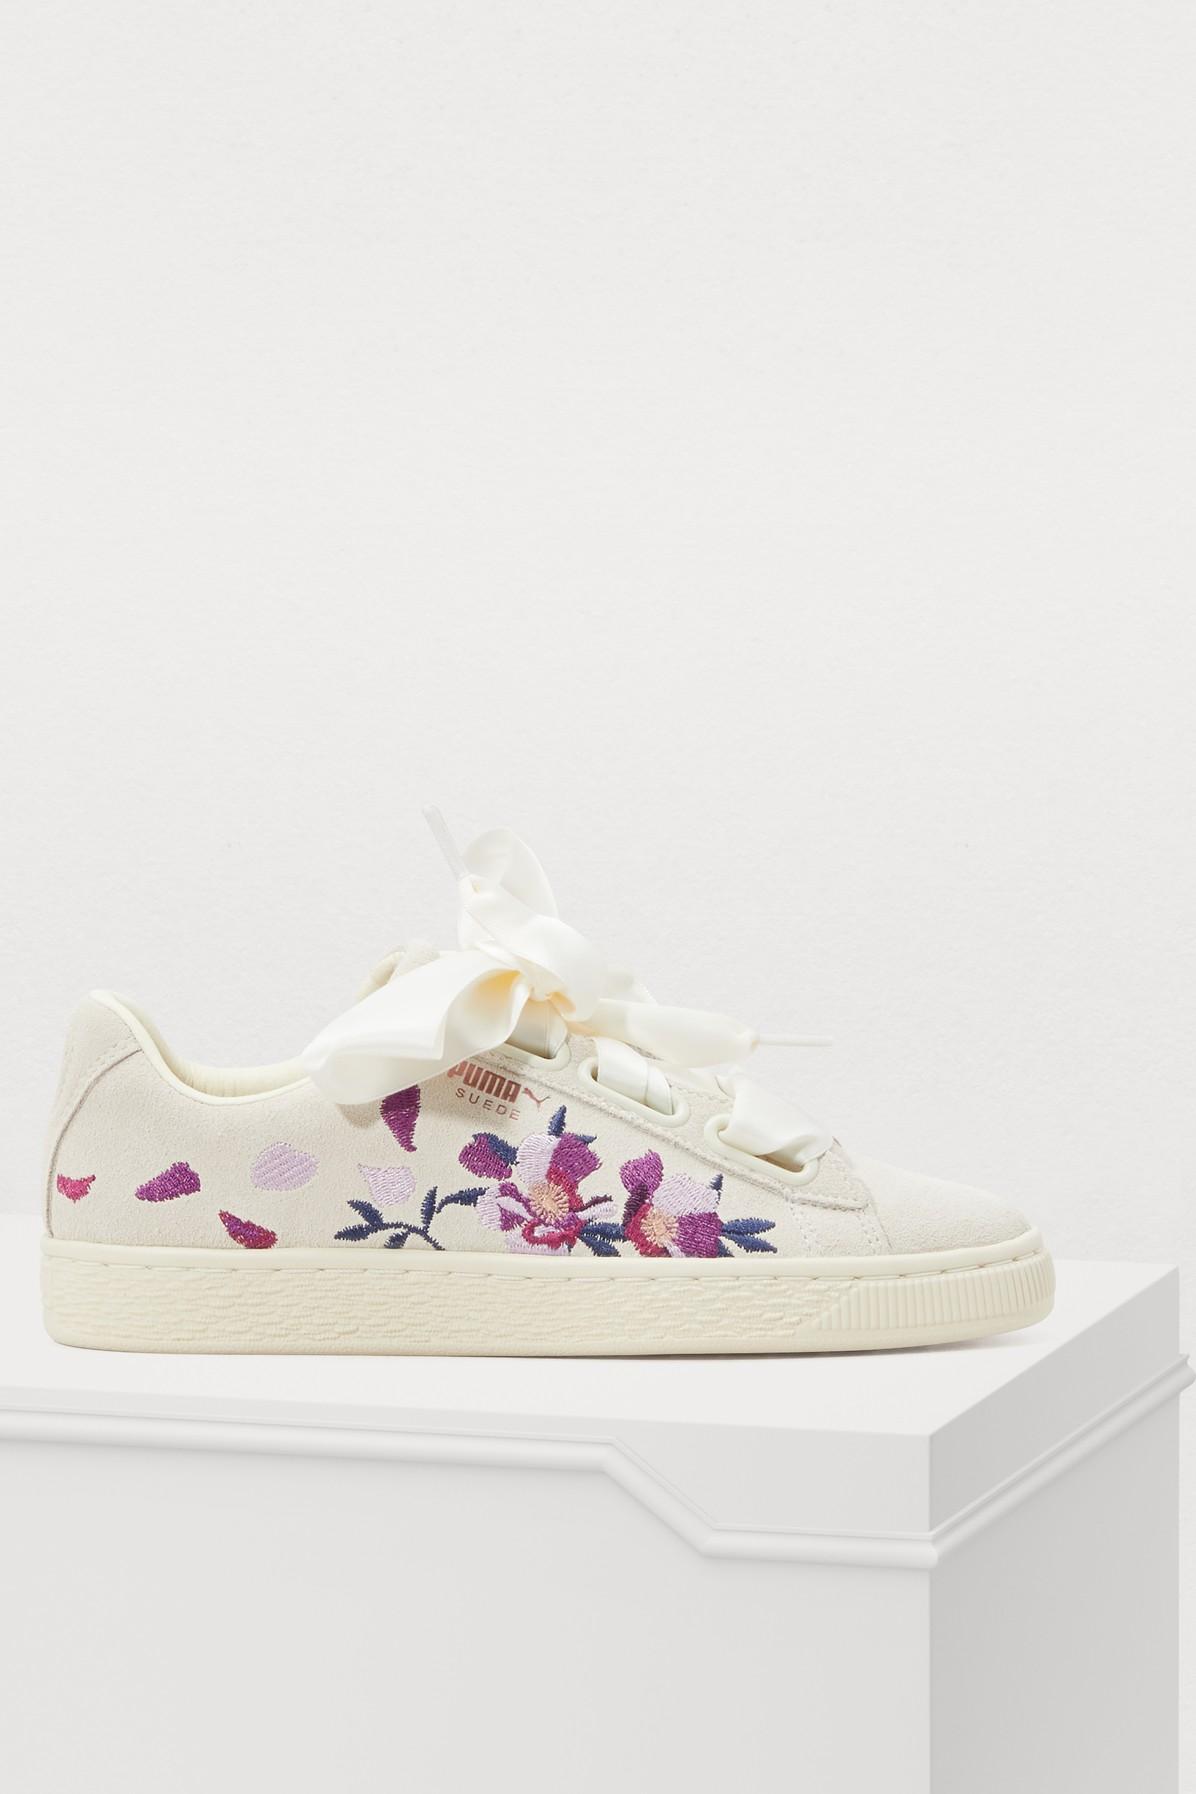 PUMA Satin Heart Flower Sneakers in White - Lyst